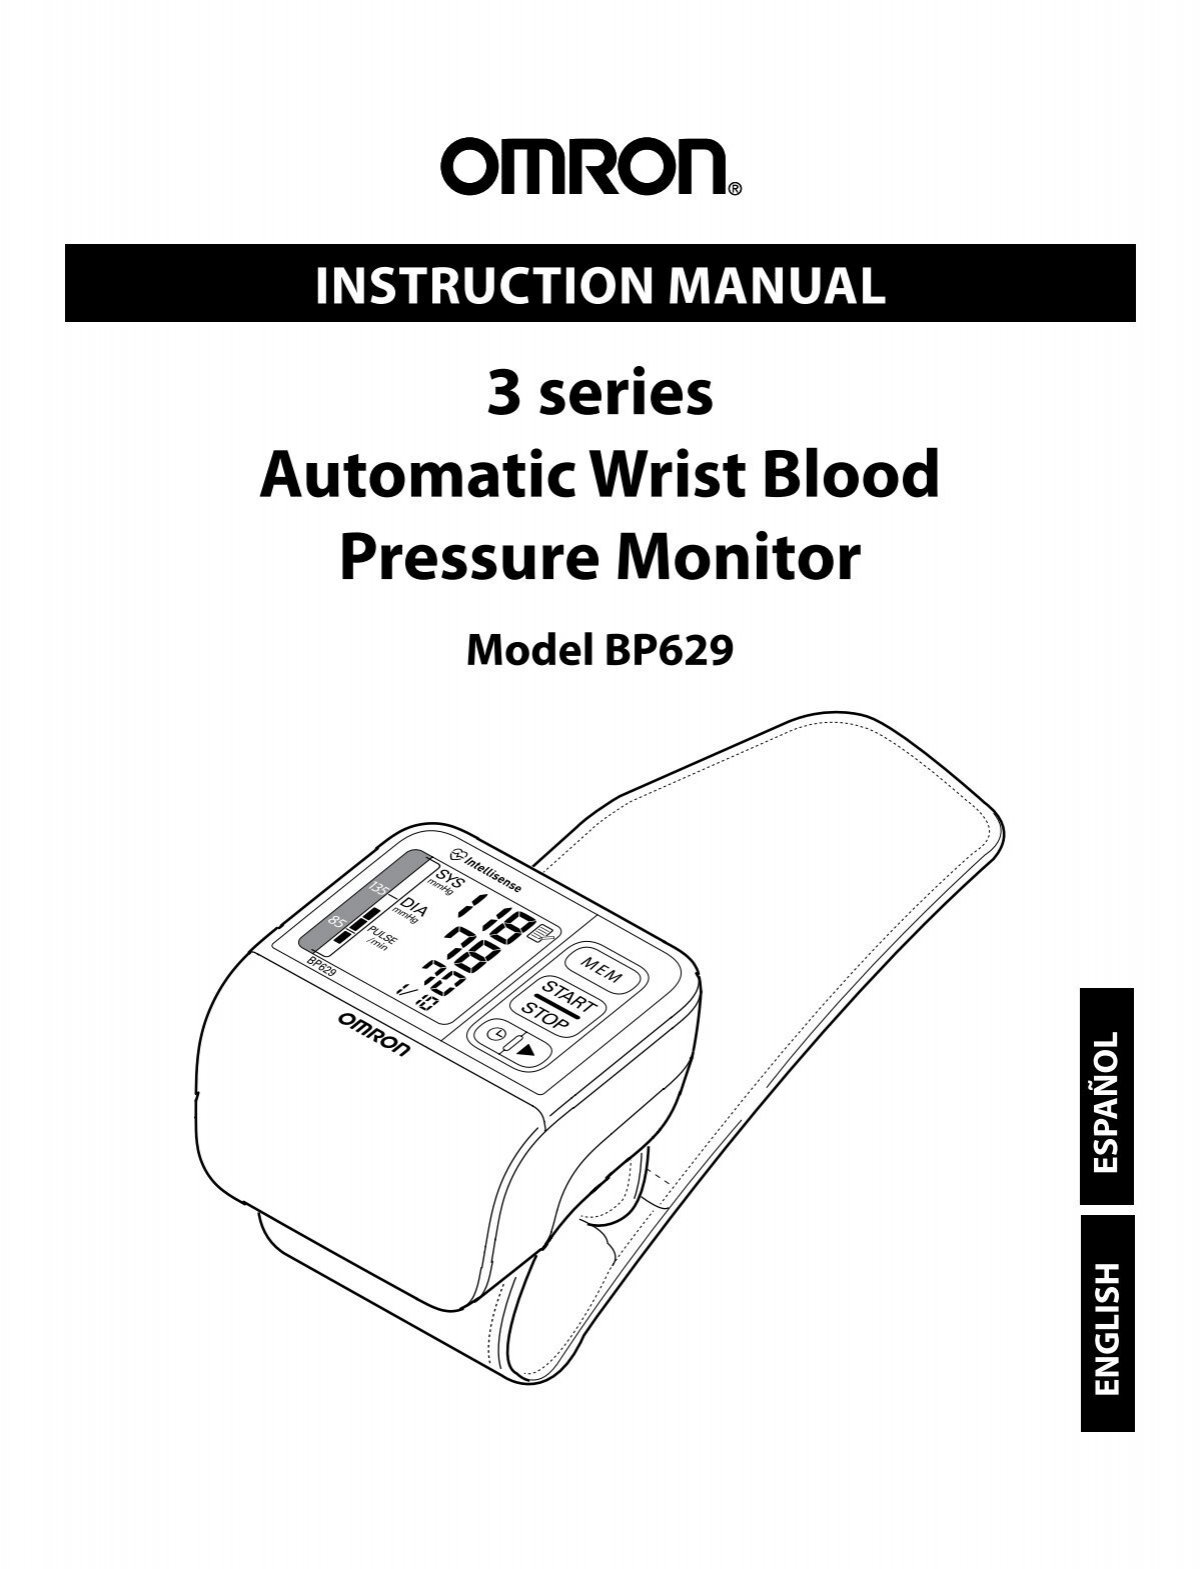 Omron 7 series plus Blood Pressure Monitor BP762